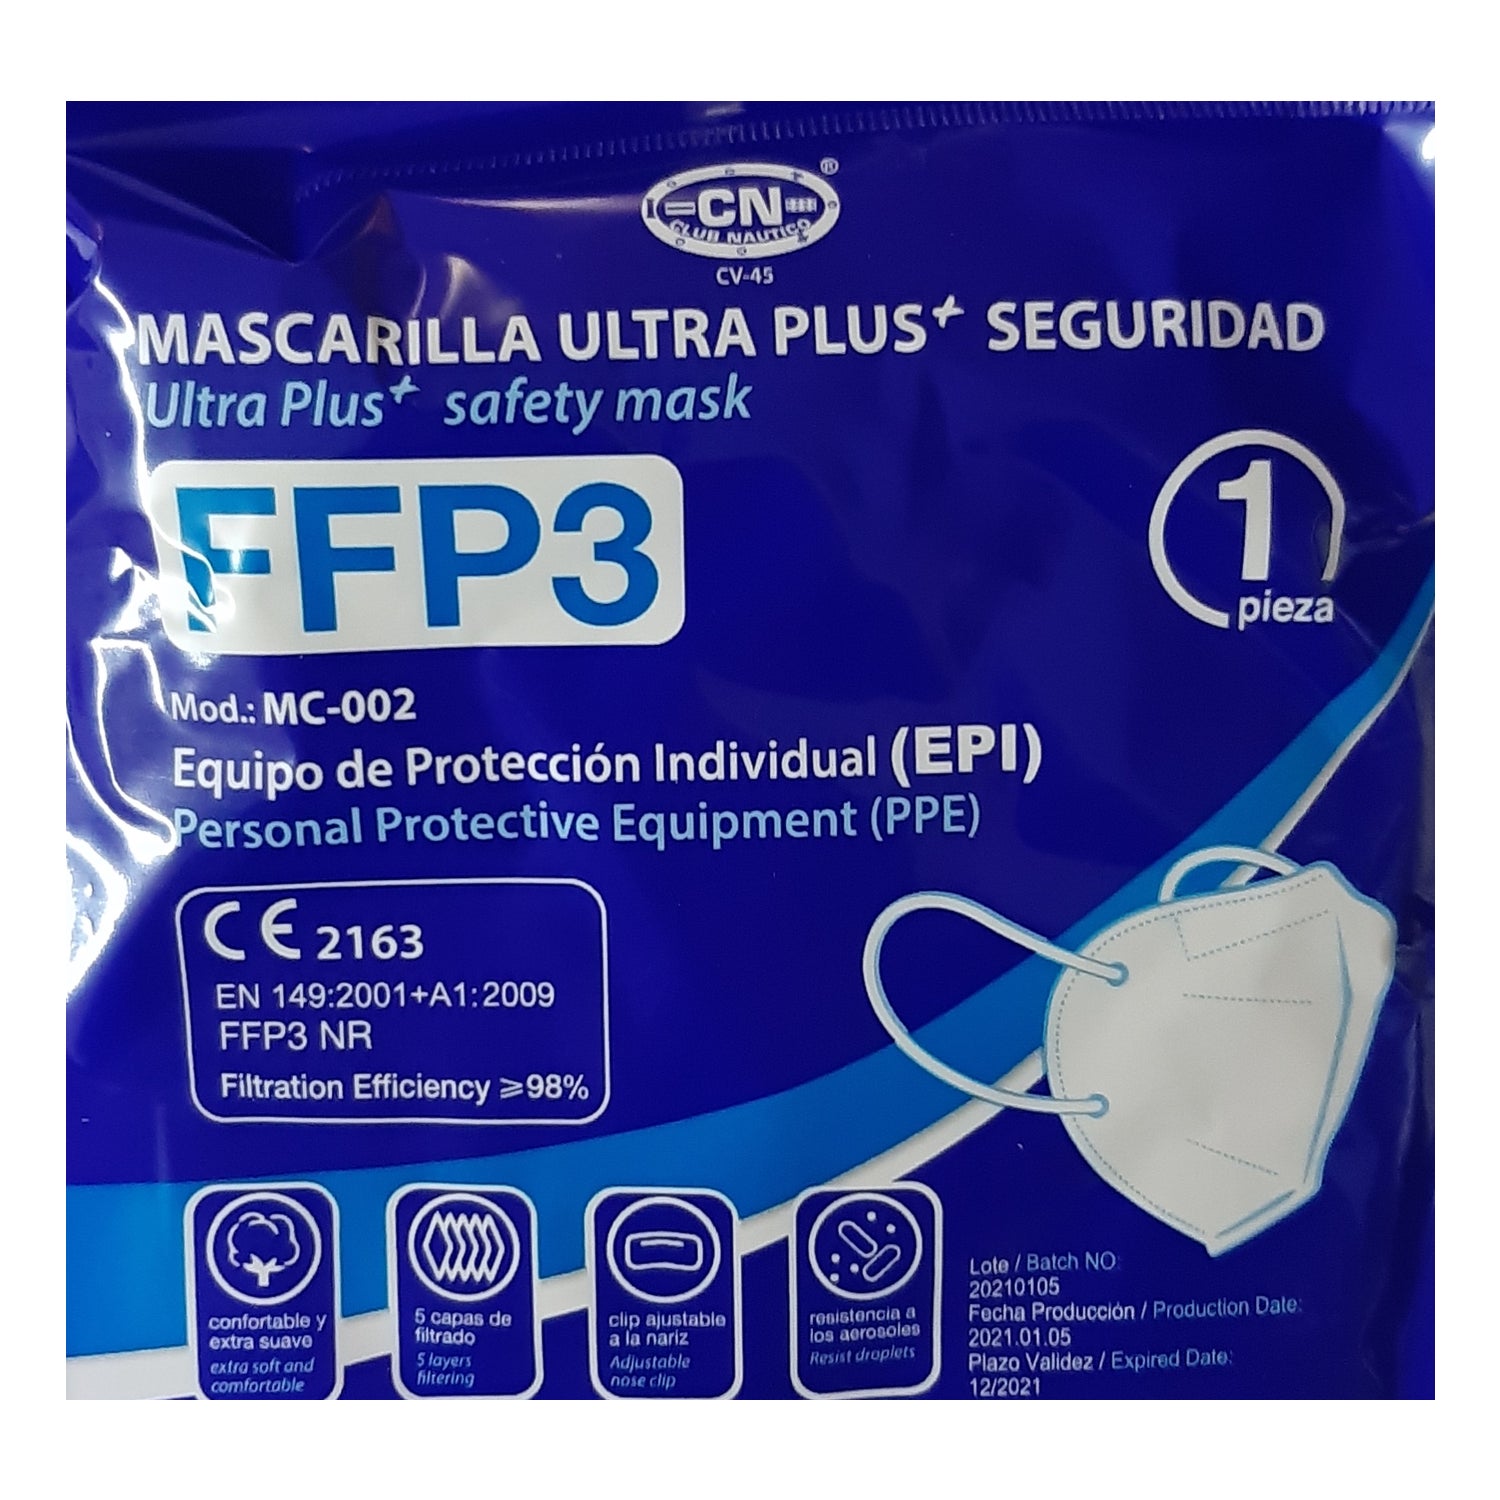 Mascarilla FFP3 ultra plus + seguridad negra